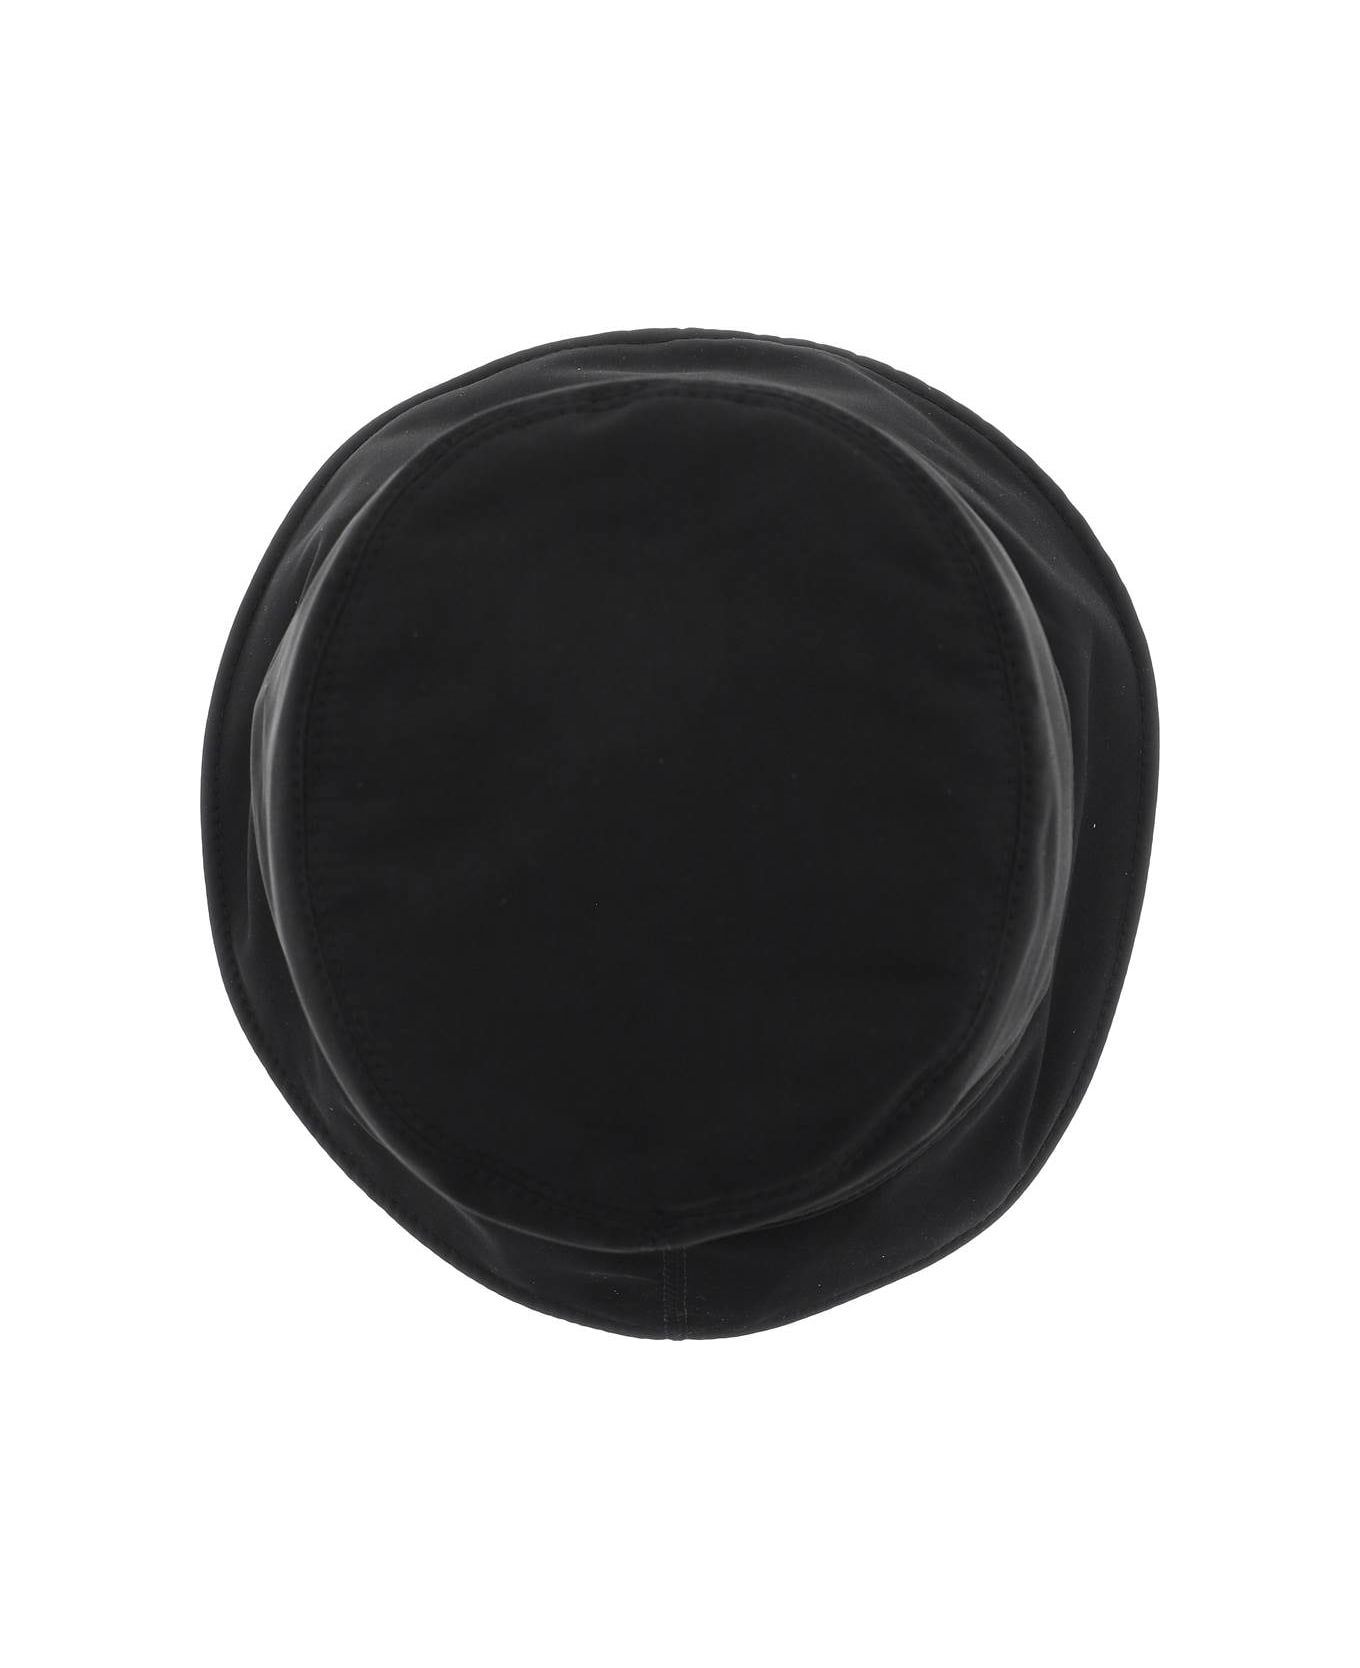 Off-White Arrow Bucket Hat - BLACK WHITE (Black)